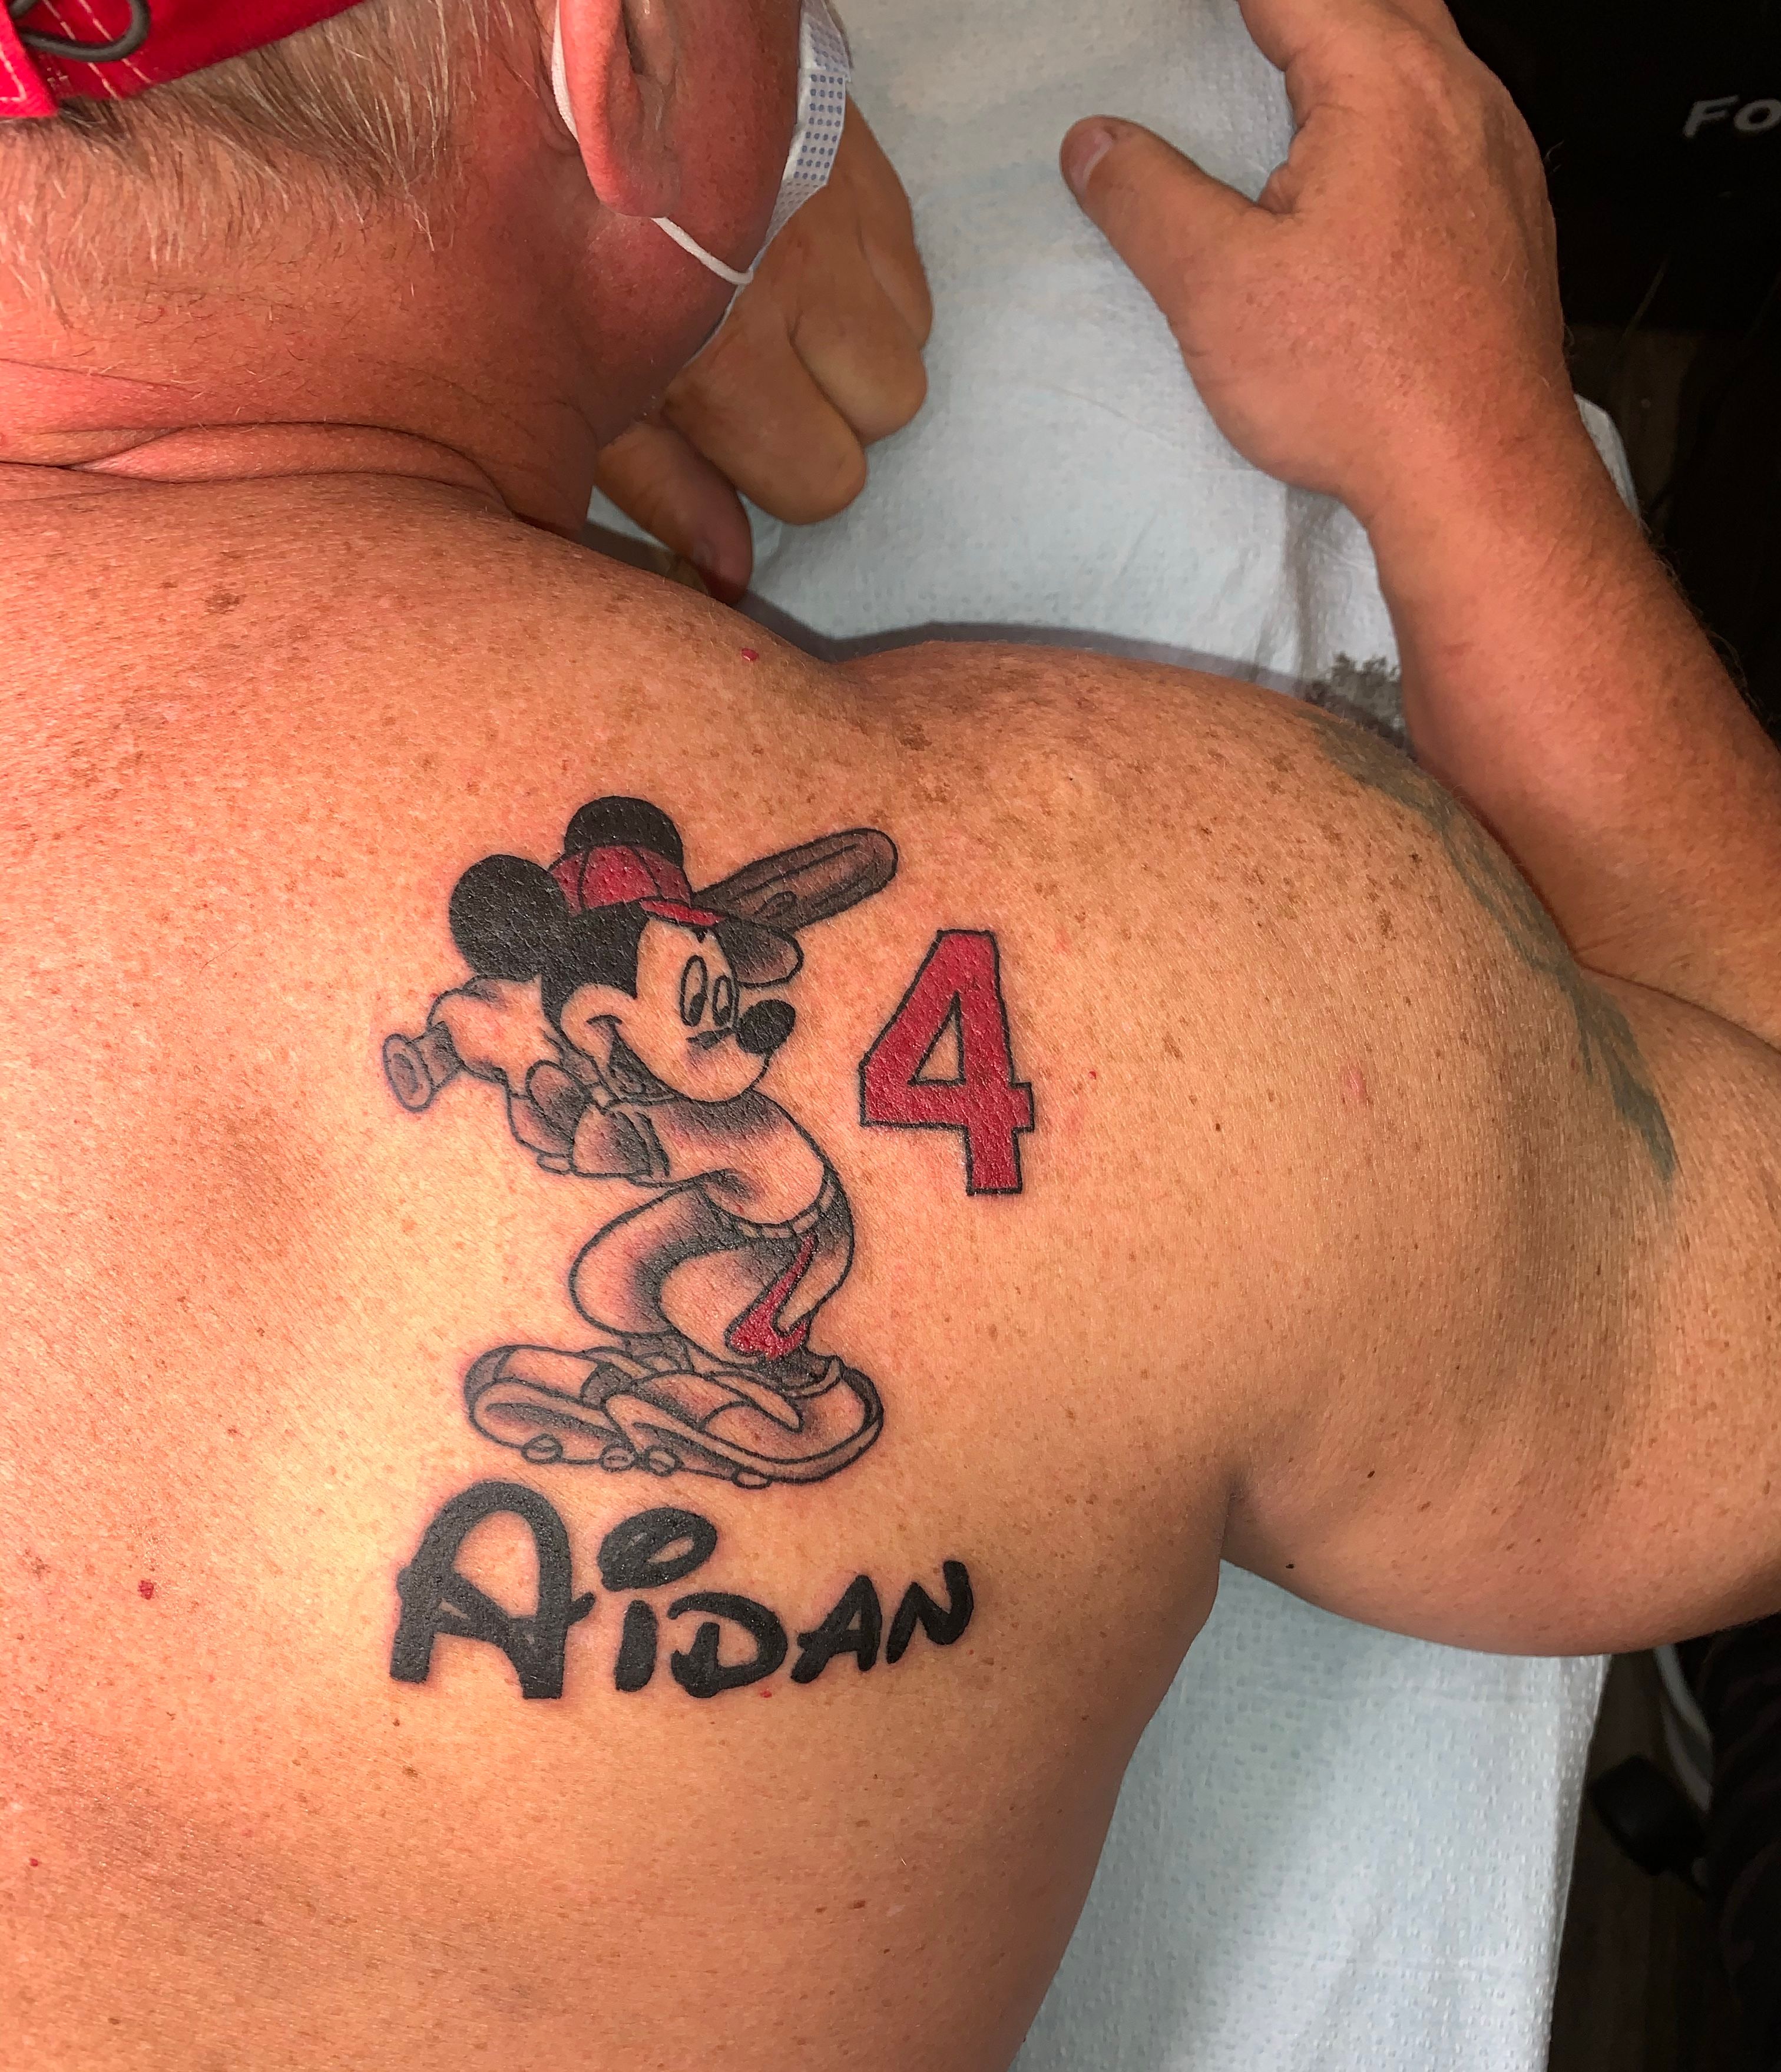 Tattoos of Mickey Get Under Disney's Skin | by Jen Durbent | Medium